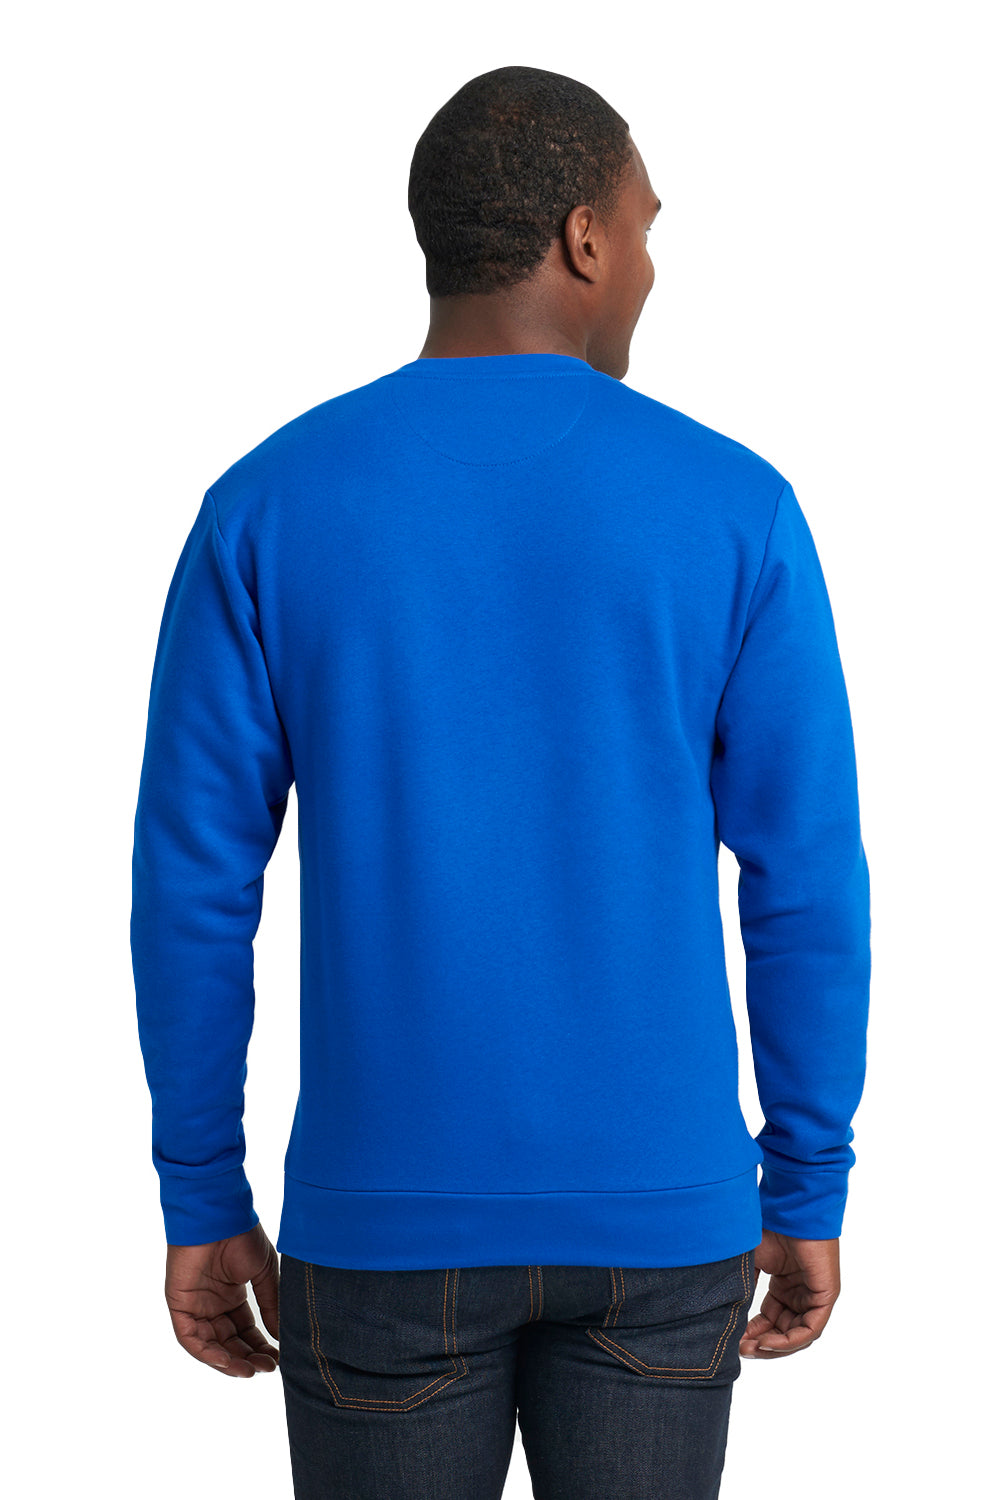 Next Level 9001 Fleece Crewneck Sweatshirt Royal Blue Back